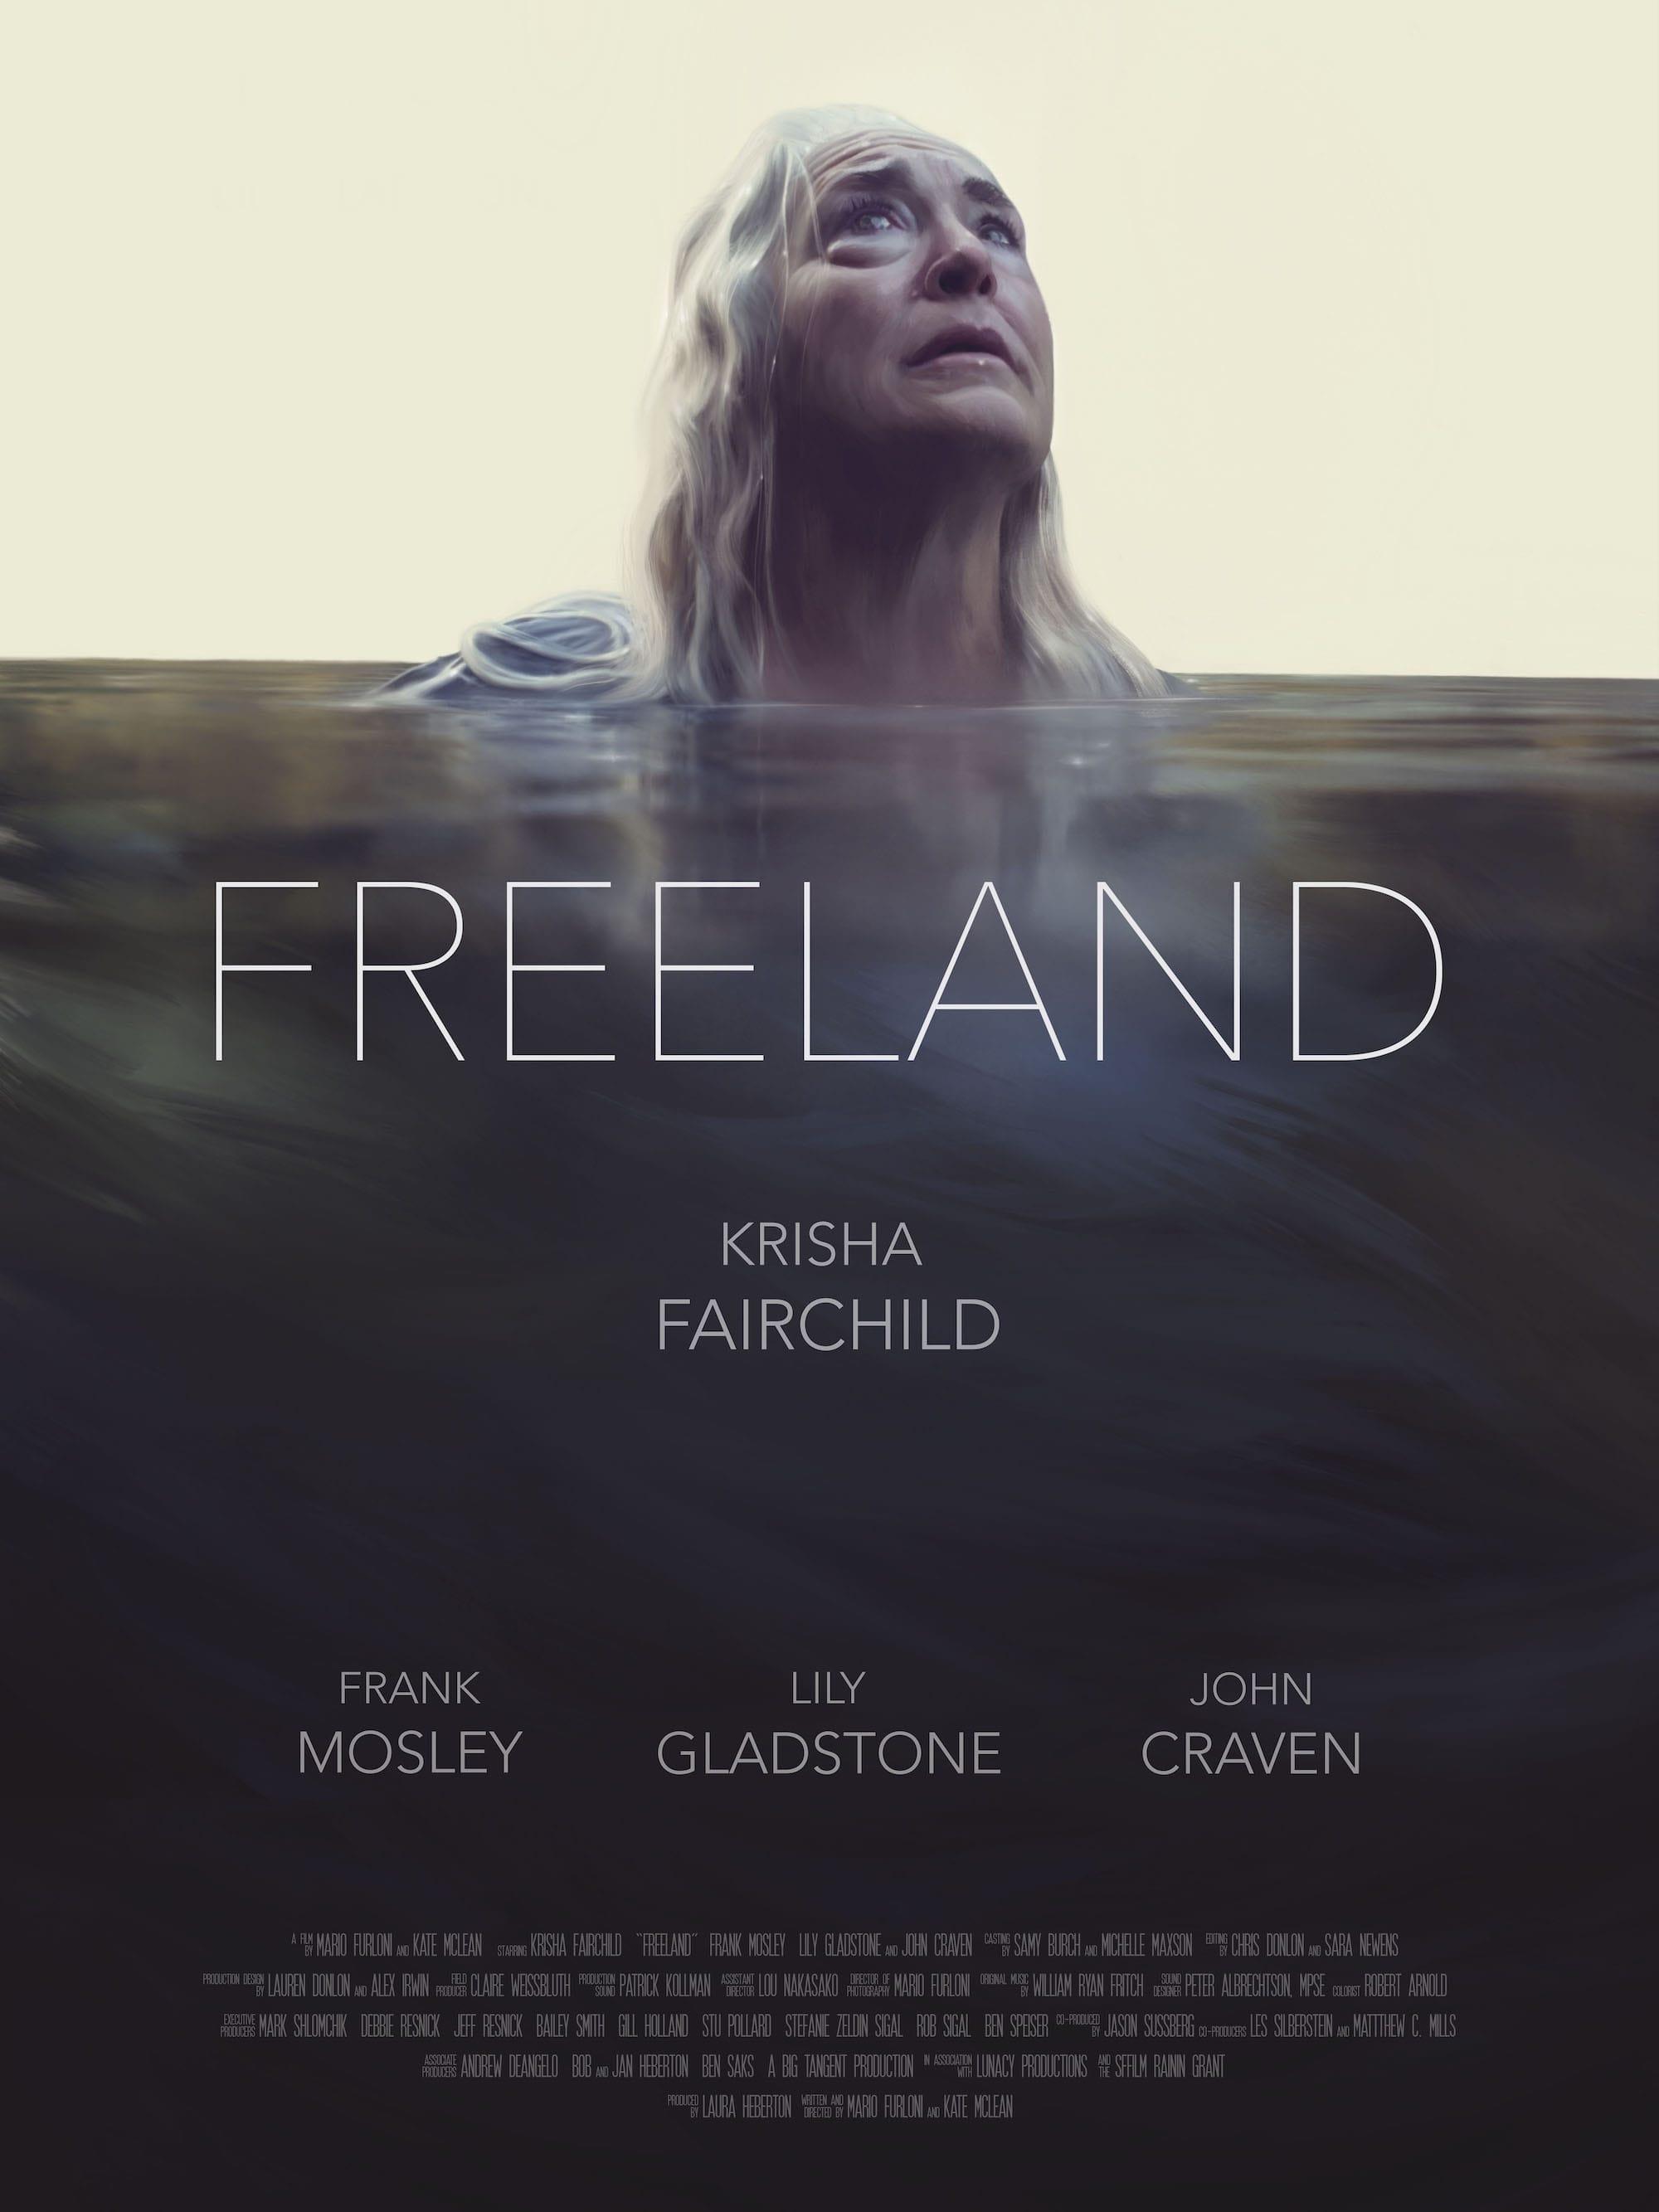 Freeland poster